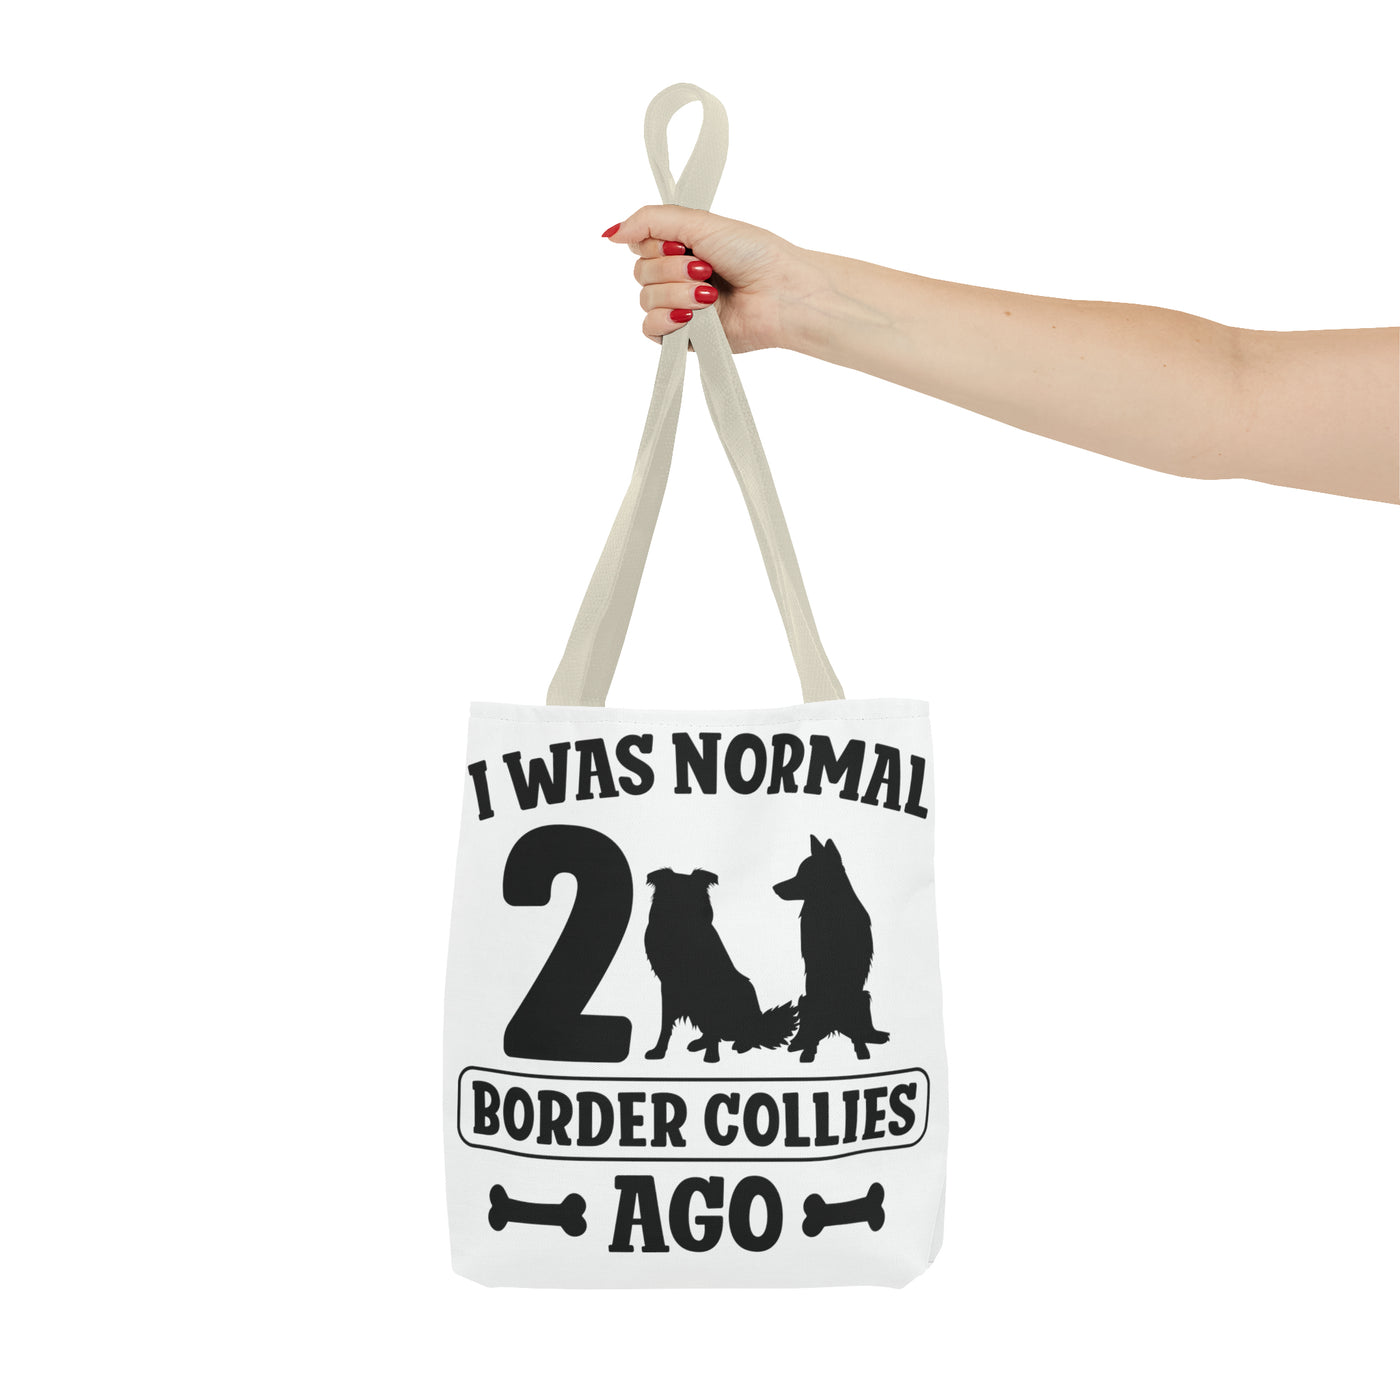 I Was Normal 2 Border Collies Ago Tote Bag